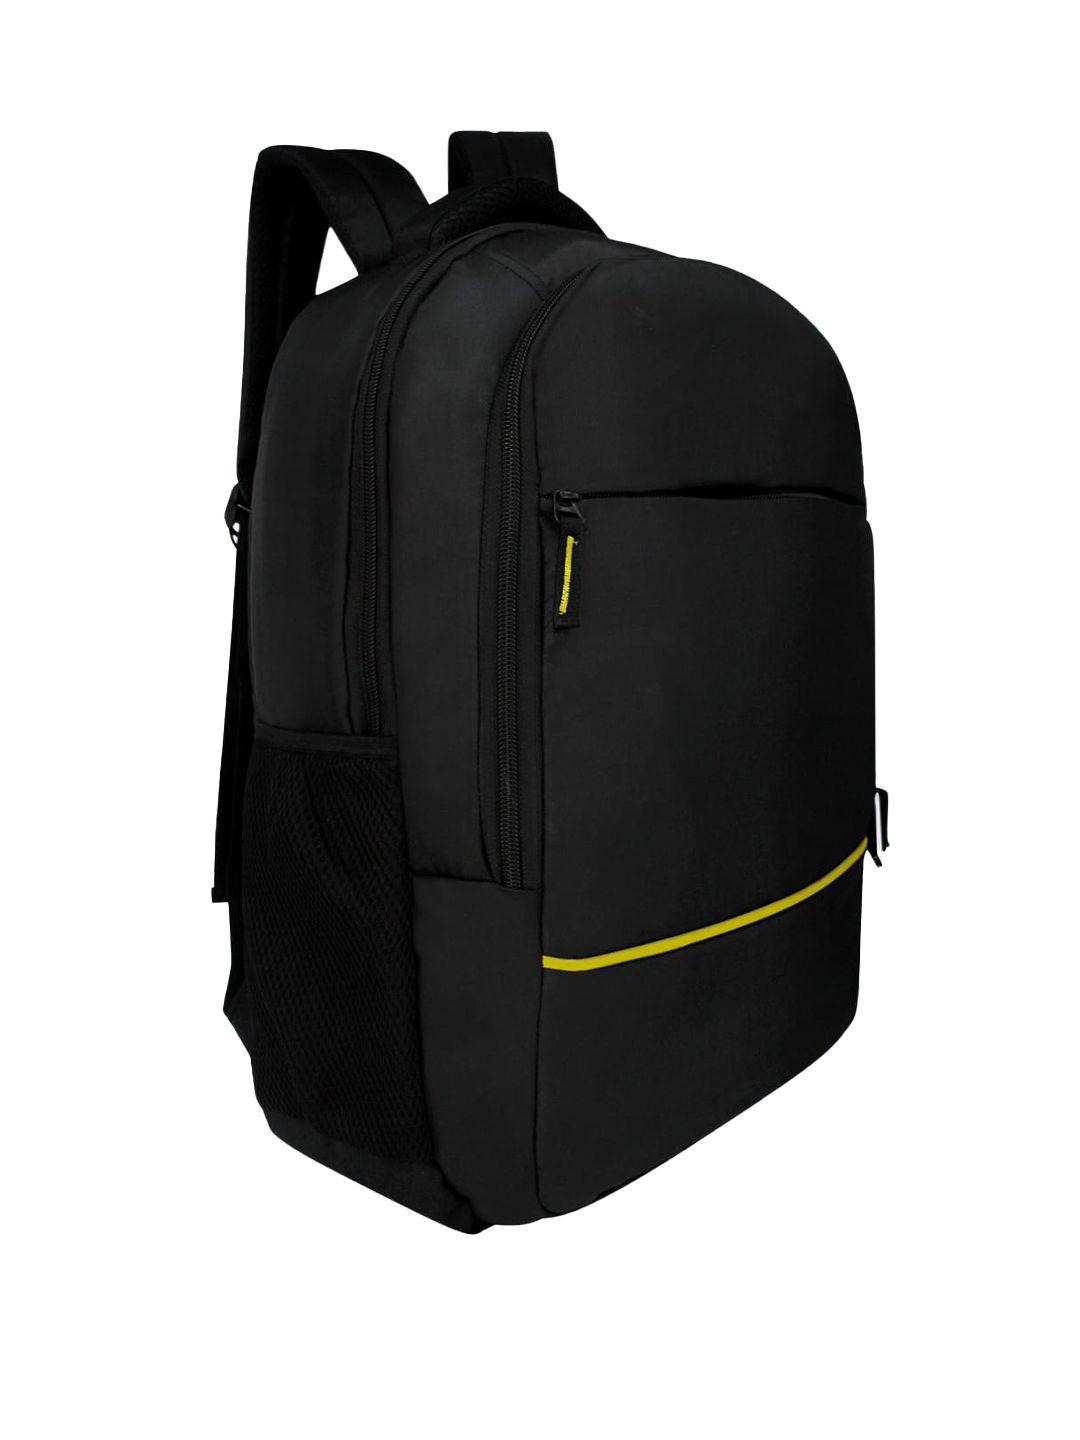 lookmuster unisex yellow & black laptop bag